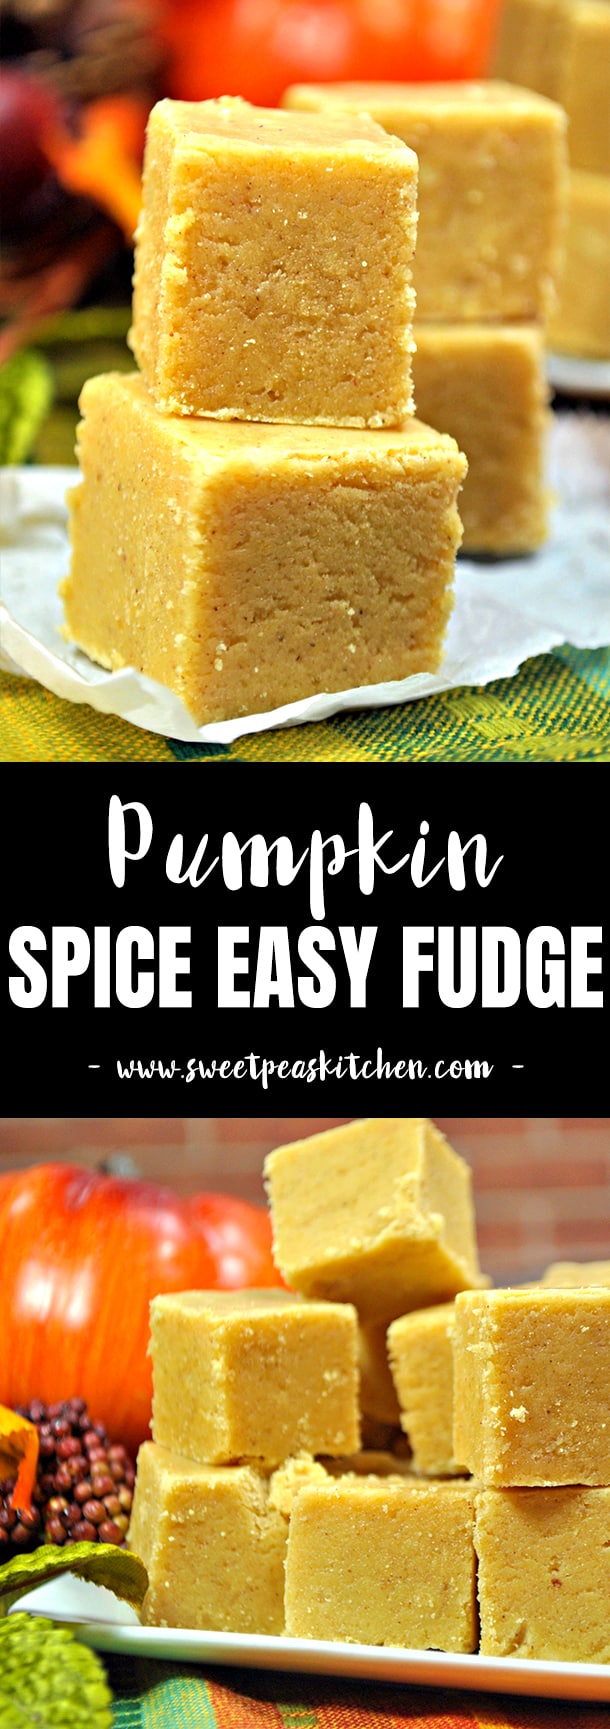 Pumpkin Spice Easy Fudge Recipe